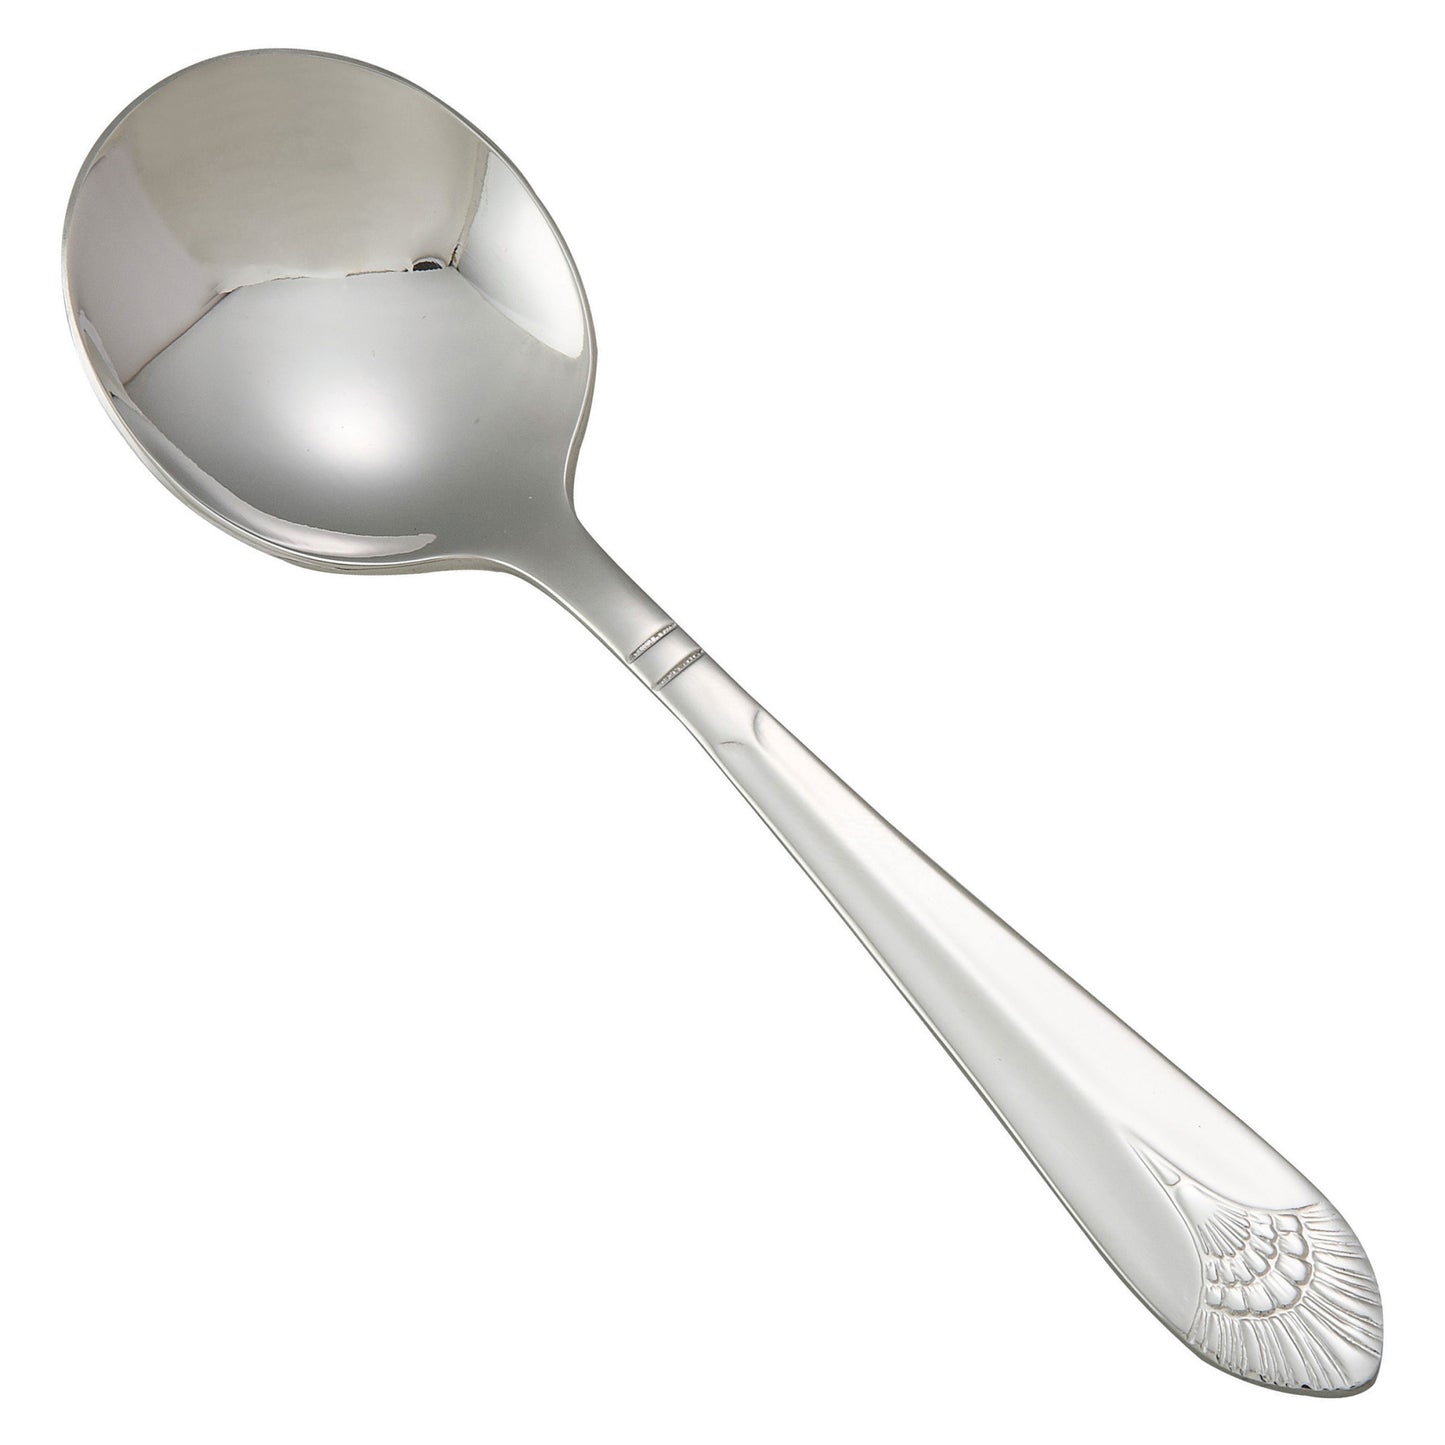 0031-04 - Peacock Bouillon Spoon, 18/8 Extra Heavyweight